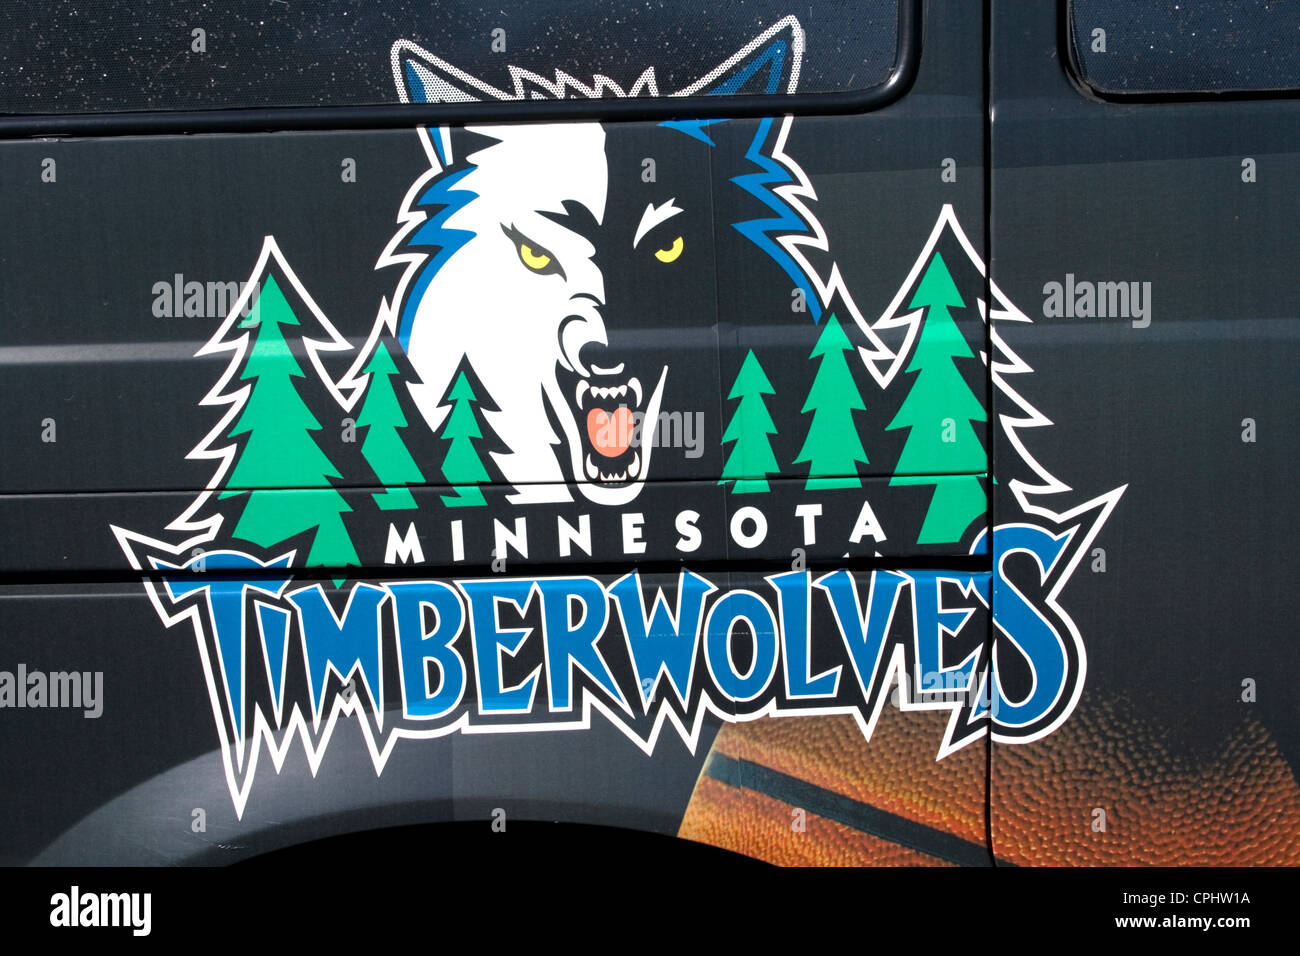 Professional NBA basketball team Minnesota Timberwolves logo on side of team van. Minneapolis Minnesota MN USA Stock Photo